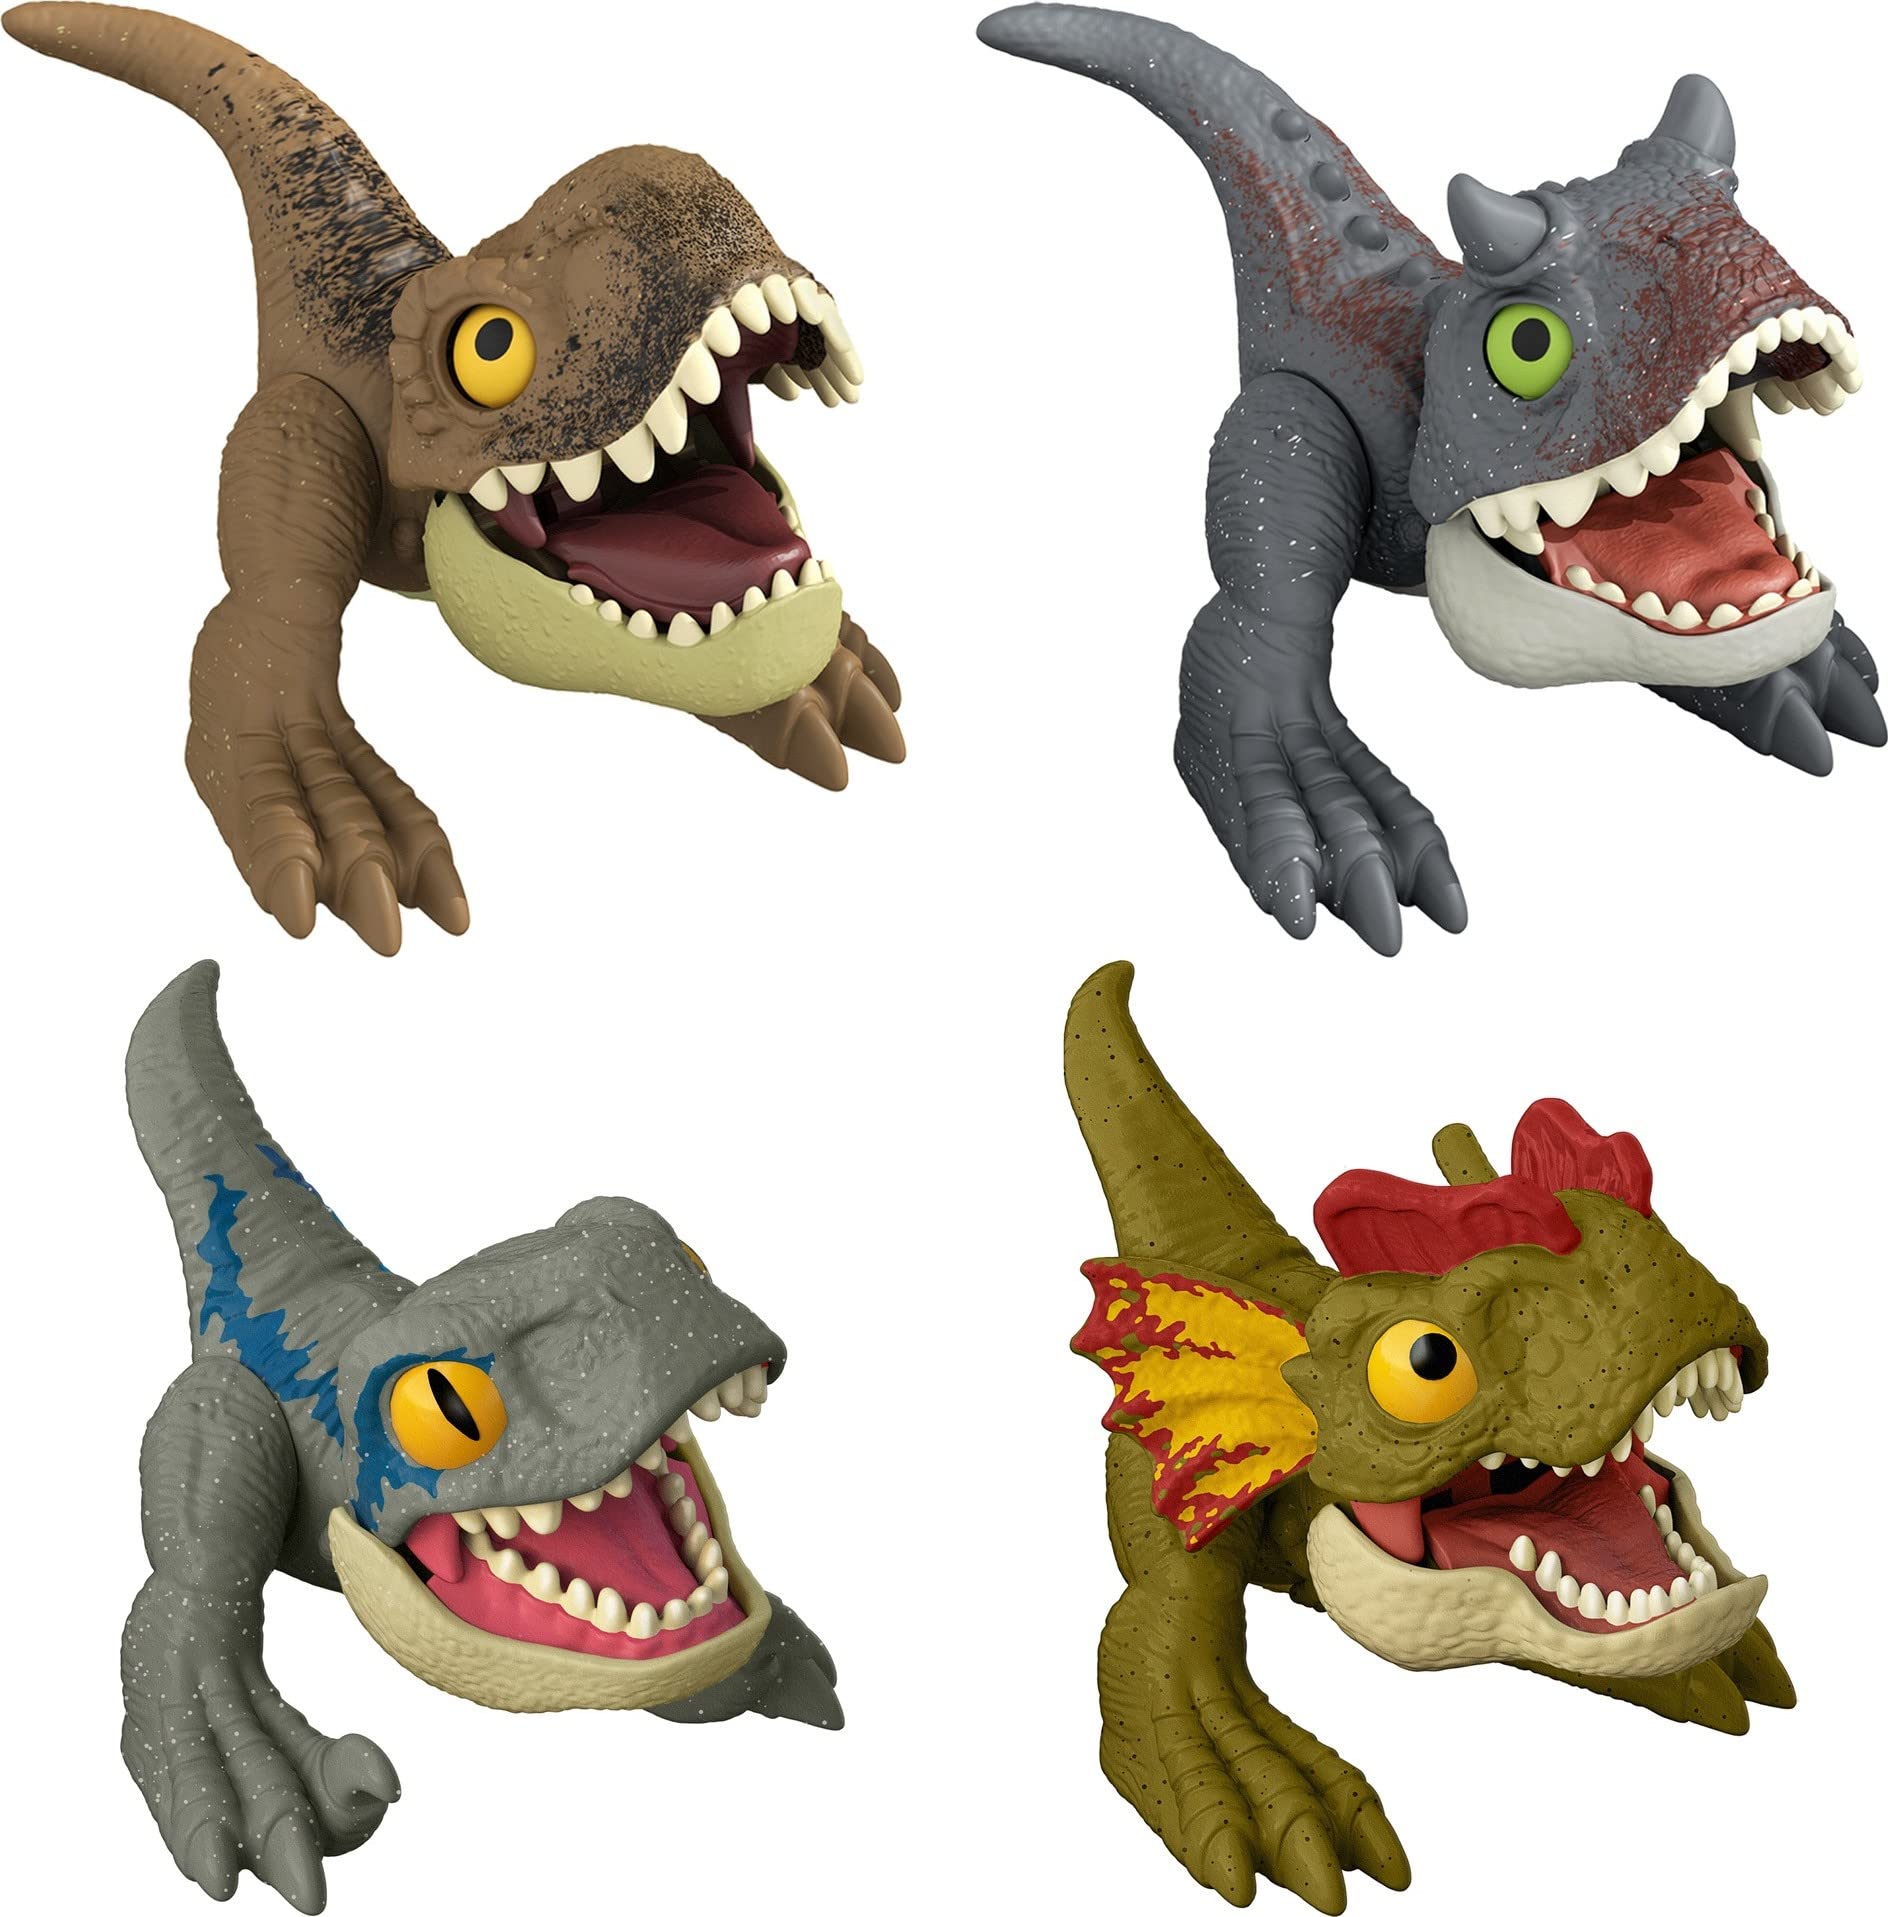 Jurassic World Dominion Uncaged Wild Pop Ups Dinosaur Toys, 4 Pack Collectible Figures - $9.50 - Amazon